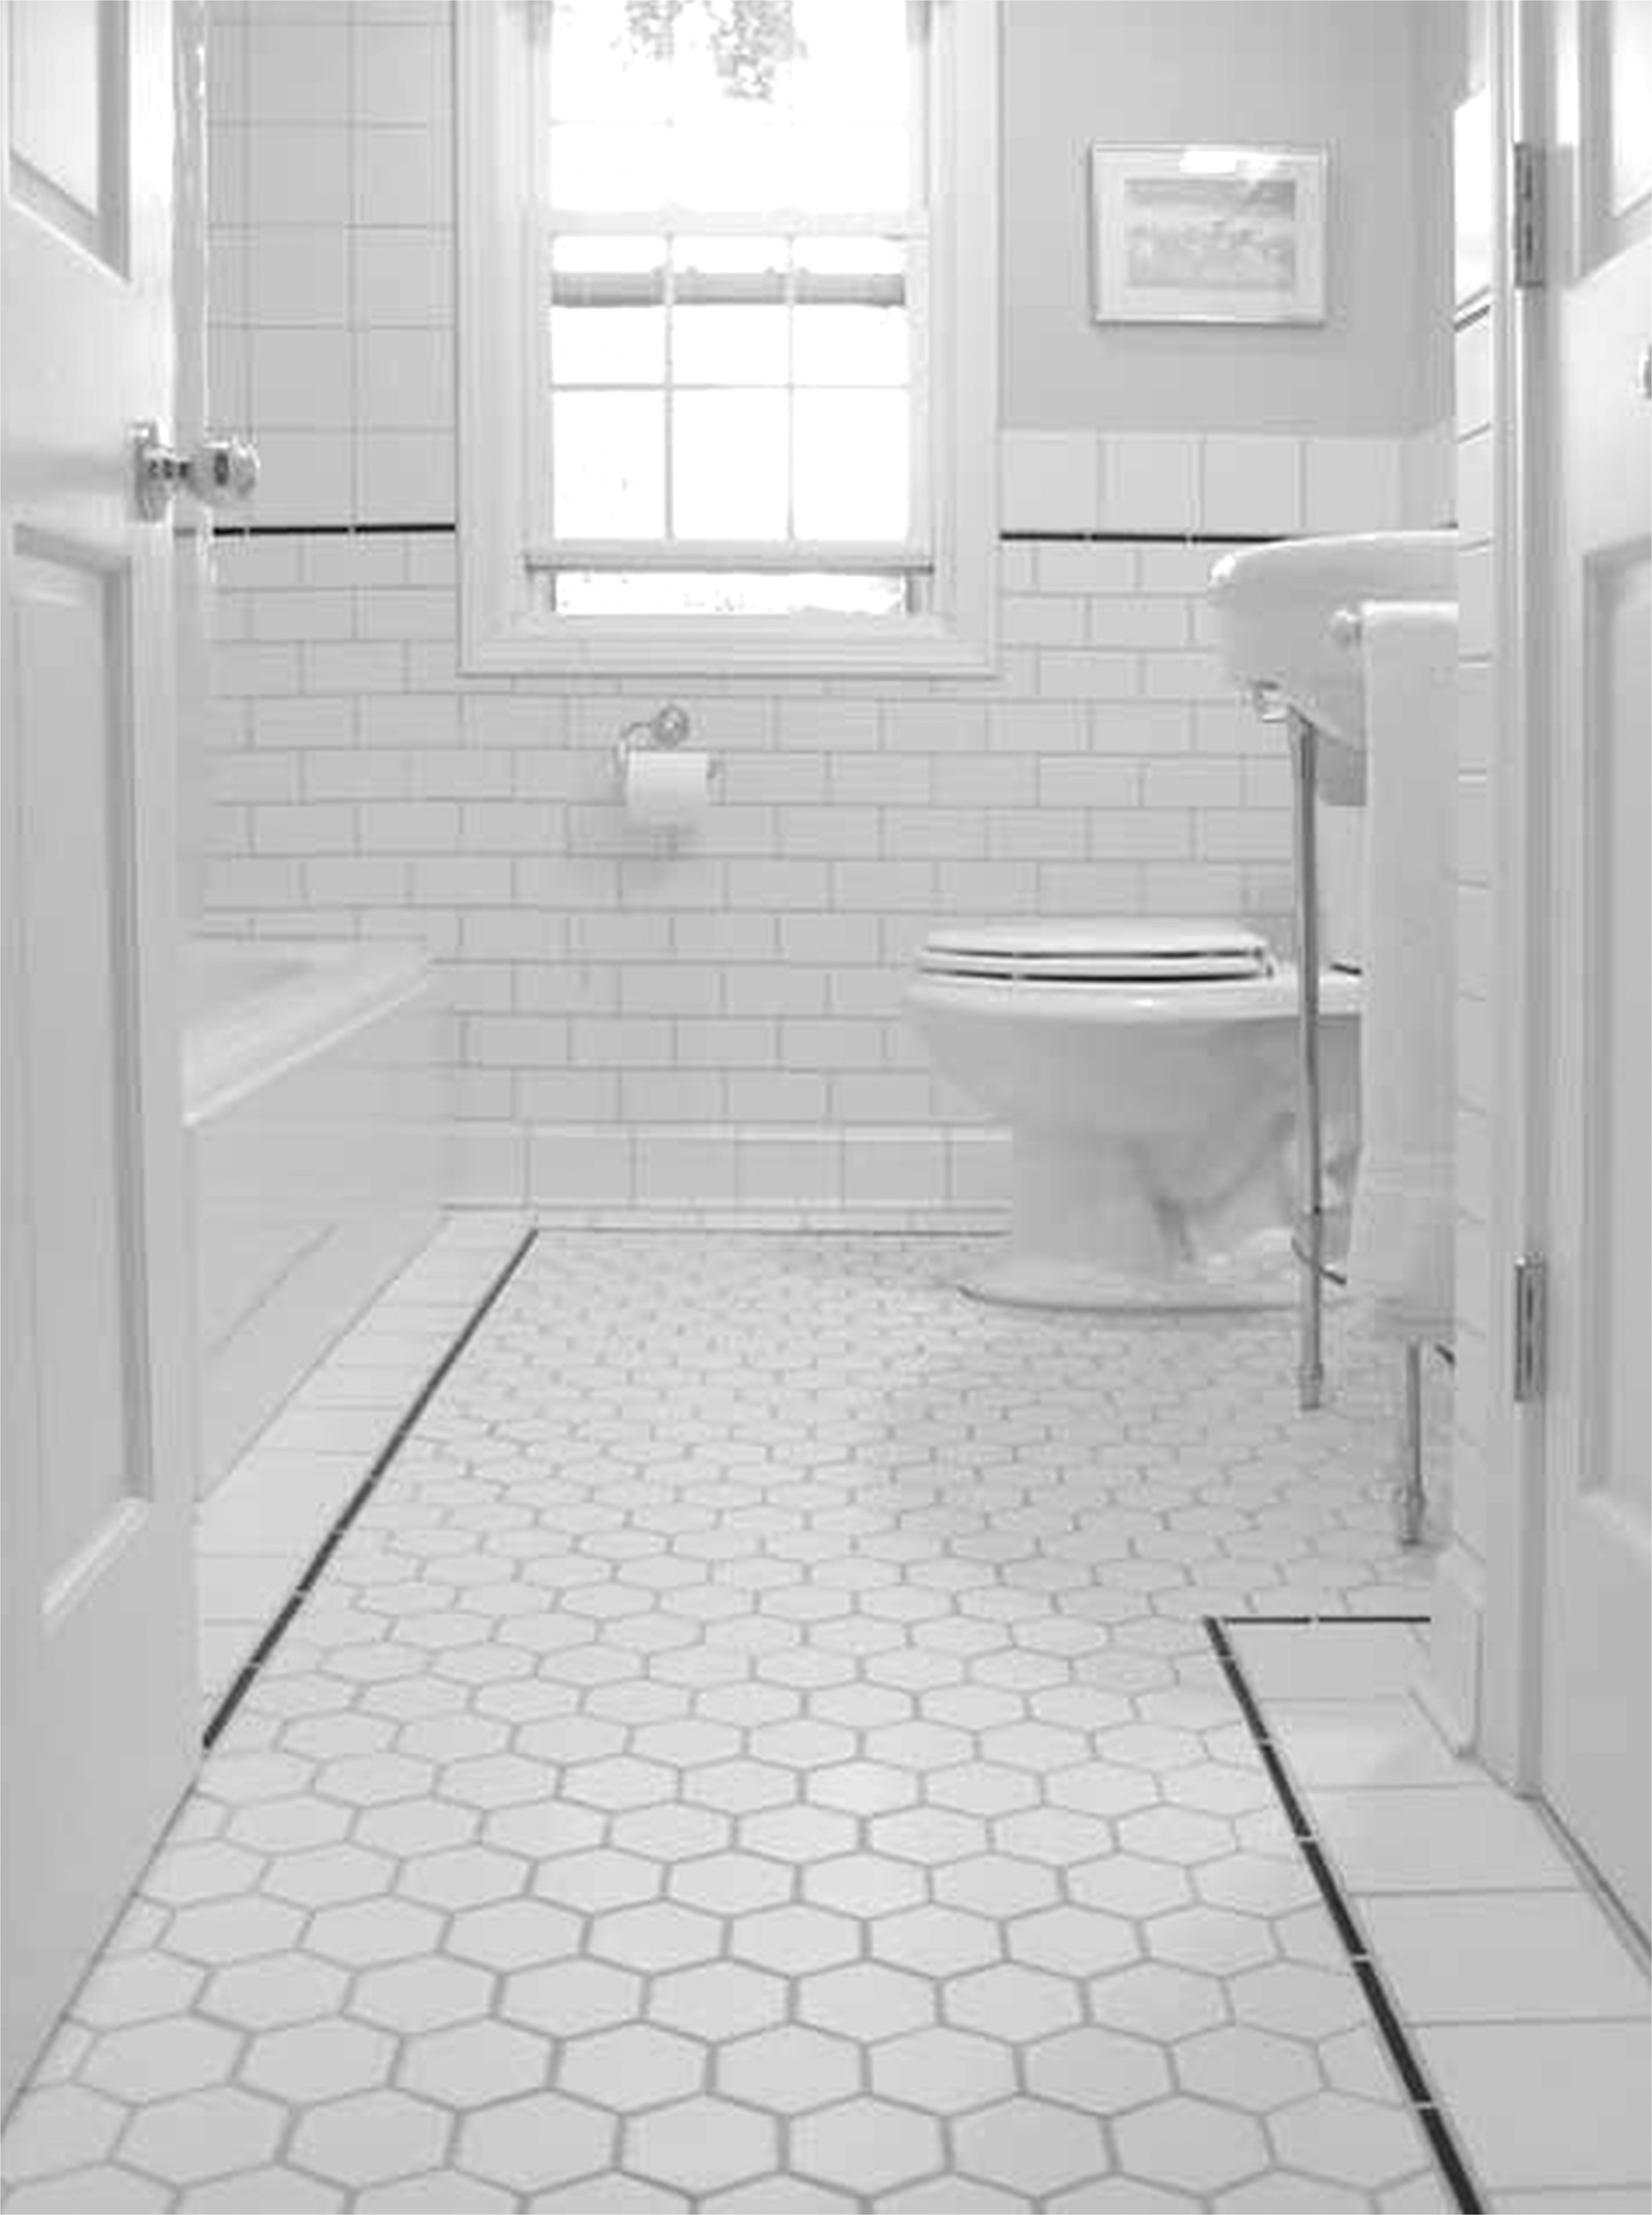 laying bathroom floor tiles new stunning inspirational installing faucet h sink new bathroom i 0d decor